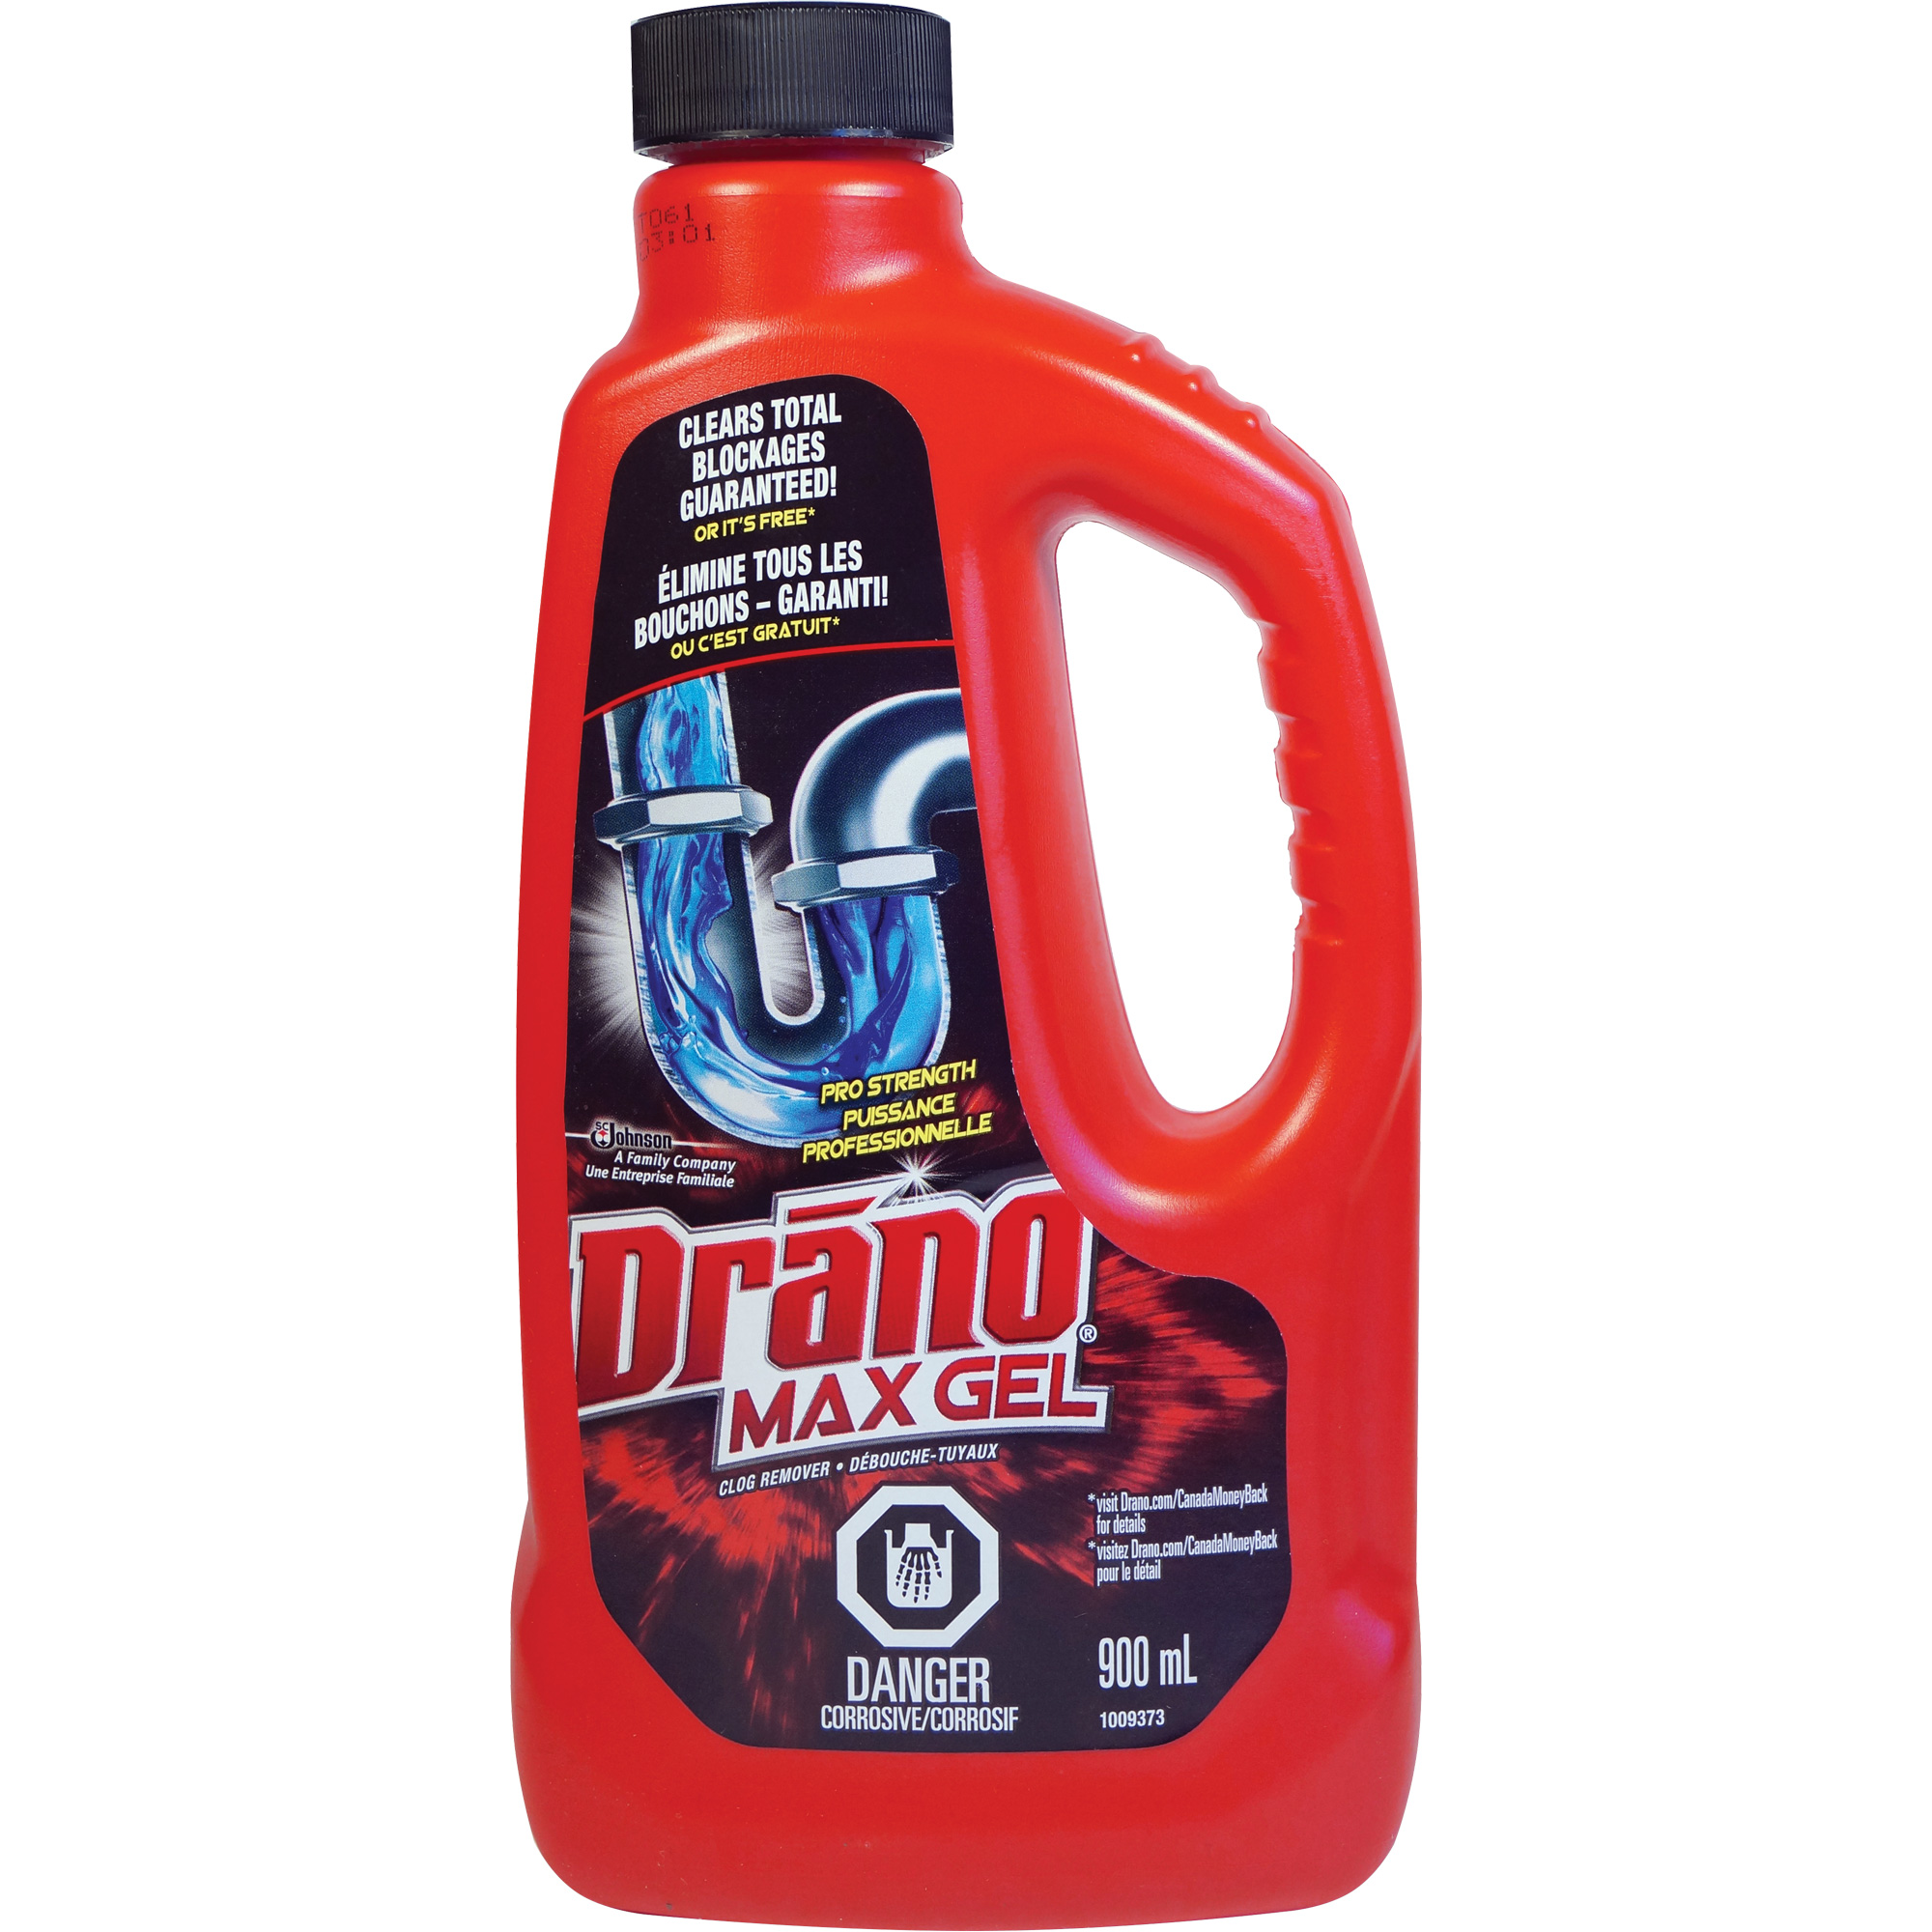 SC JOHNSON Drano® Max Gel Clog Remover Drain Cleaner JL977 (10059200007231)  | Shop Drain Cleaners | TENAQUIP